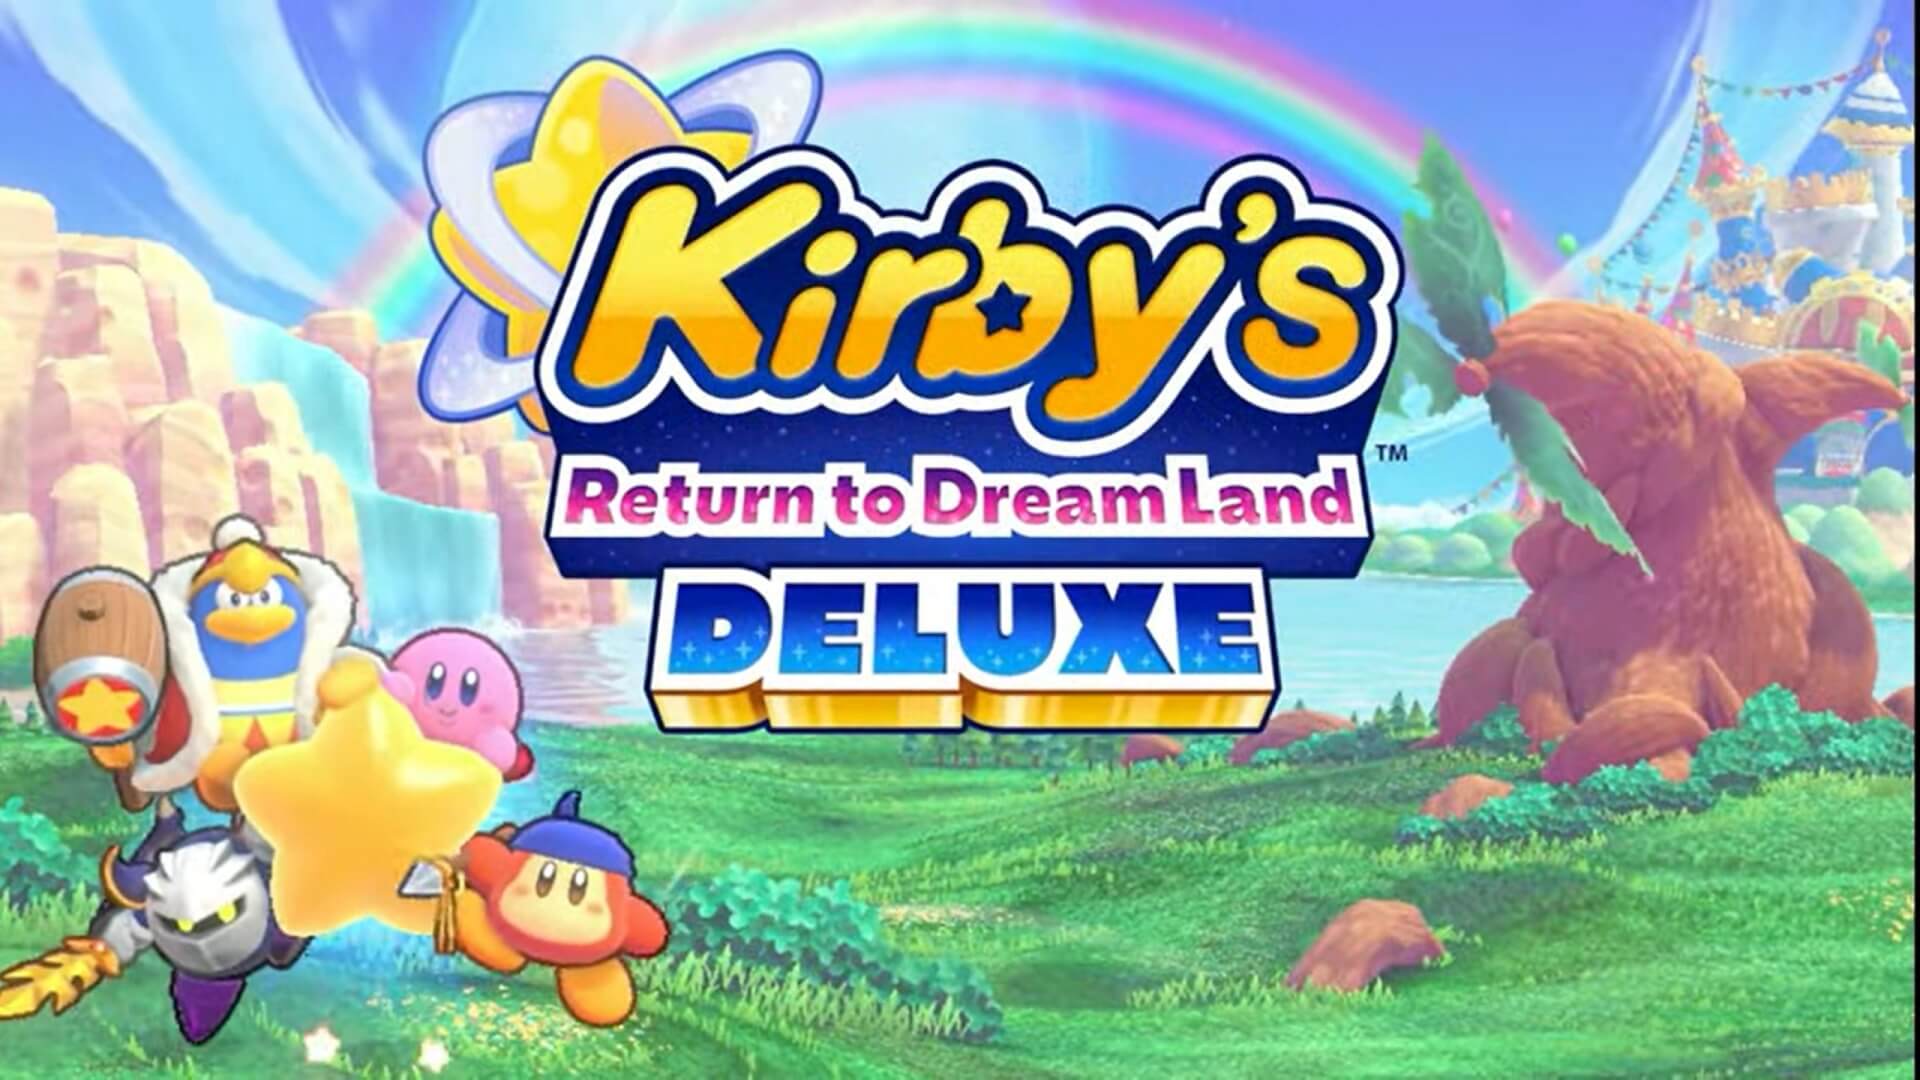 Kirbys-Return-to-Dreamland-Deluxe-scaled-1.jpg